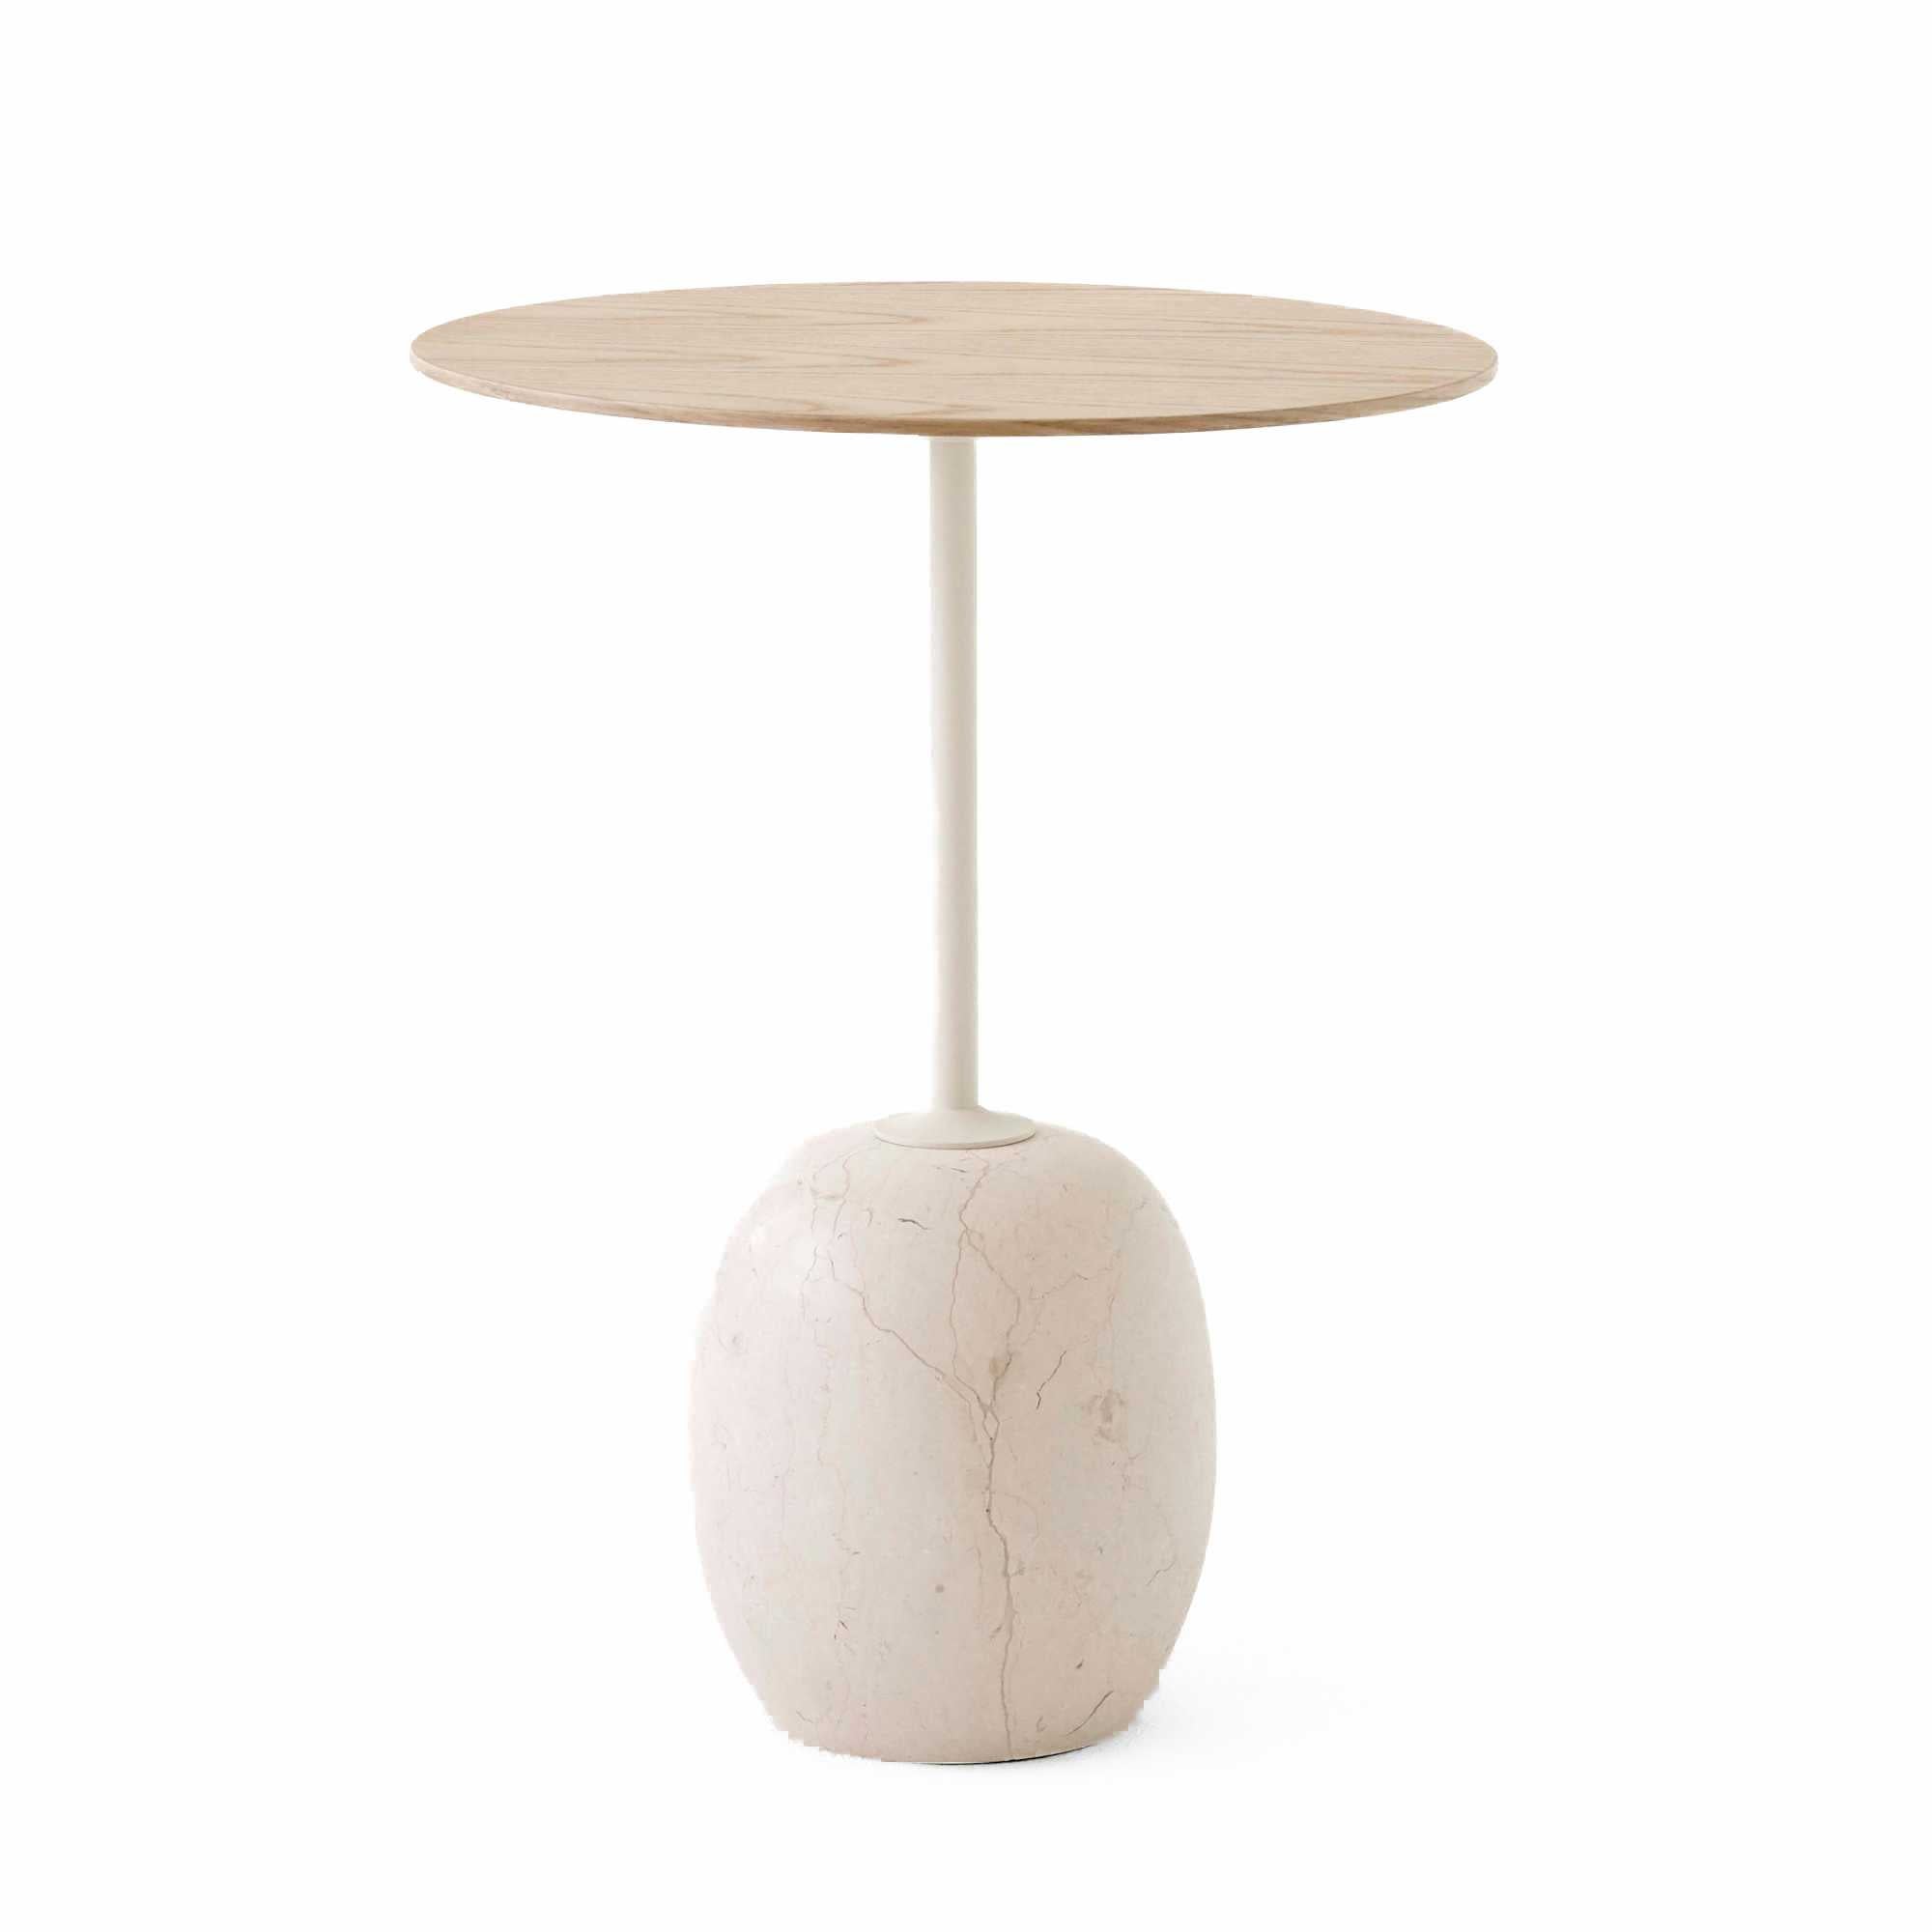 &tradition Lato LN8 side table LN8 (Ø40xH50cm), lacquered oak/cream marble